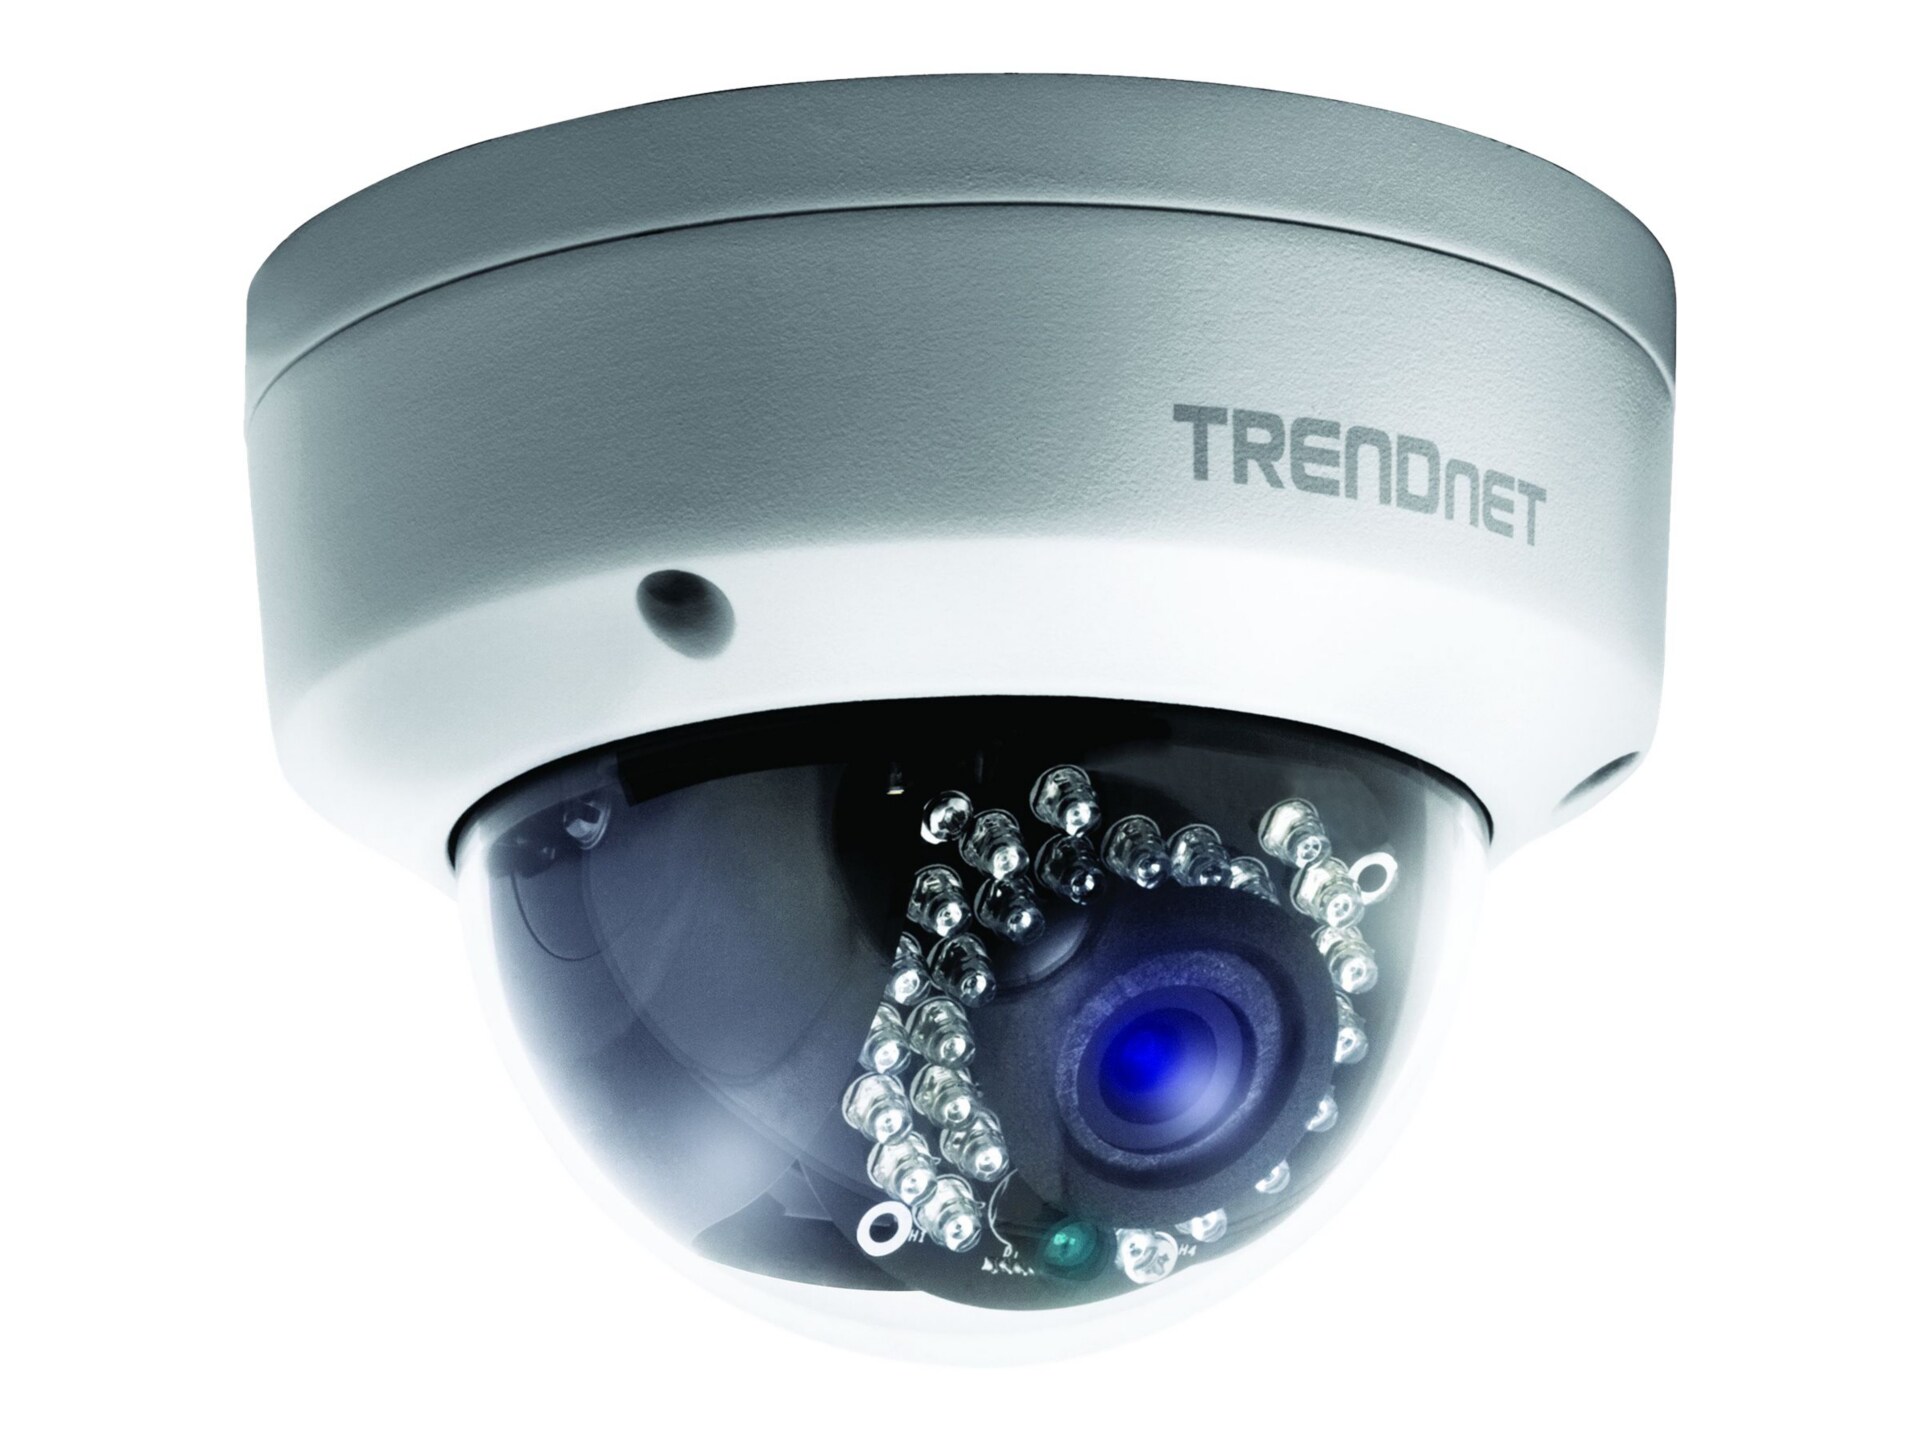 TRENDnet TV IP311PI Outdoor 3 MP PoE Dome Day/Night Network Camera - network surveillance camera